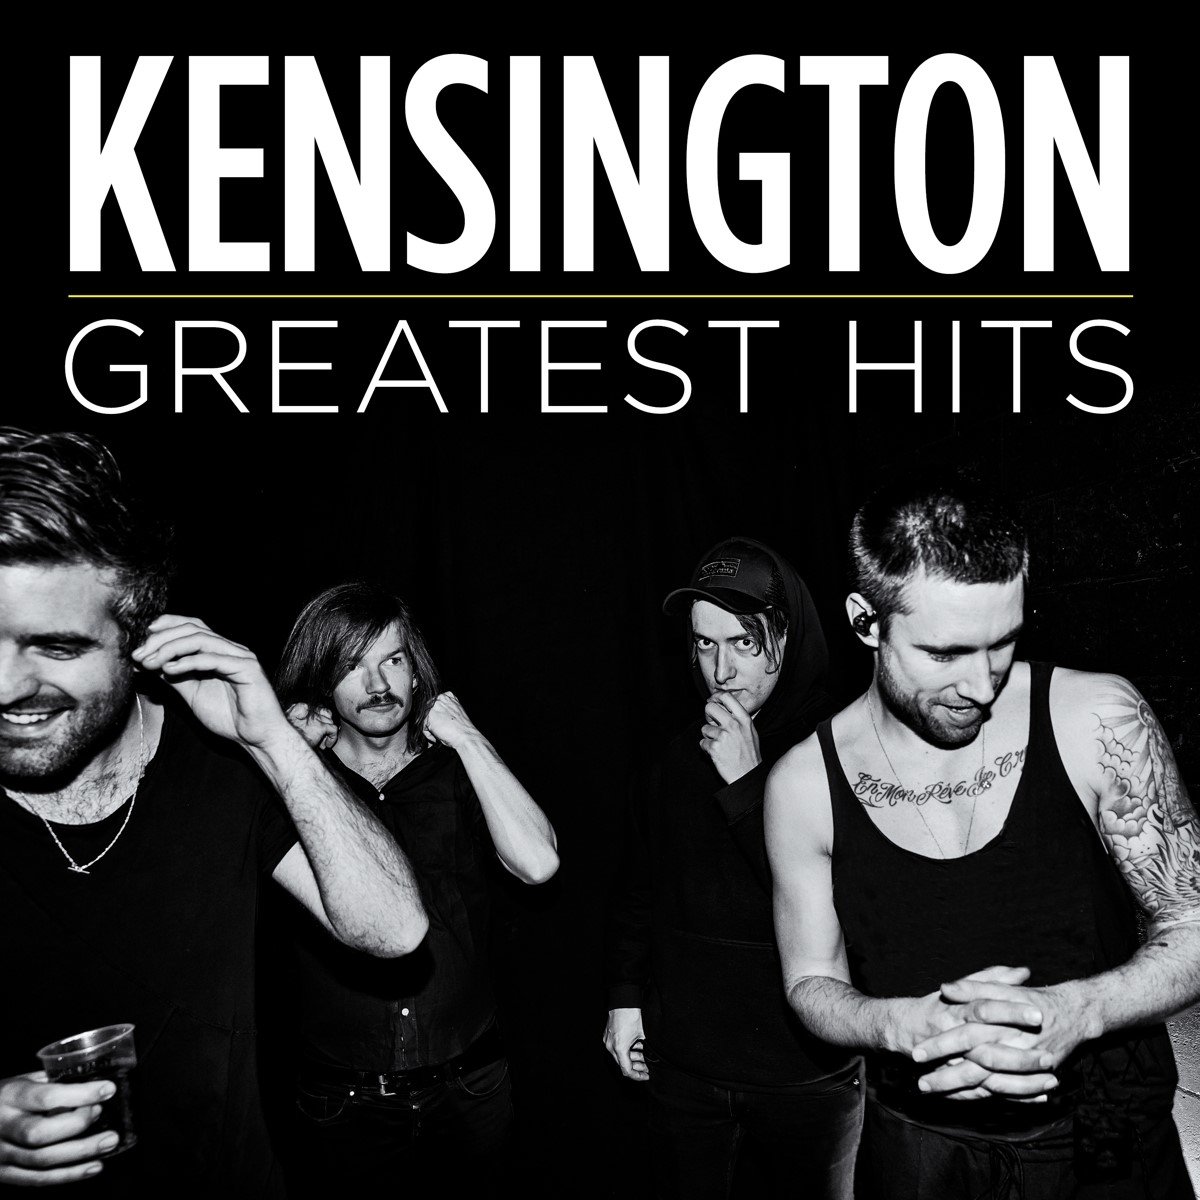 Kensington - Greatest Hits (CD) - Kensington